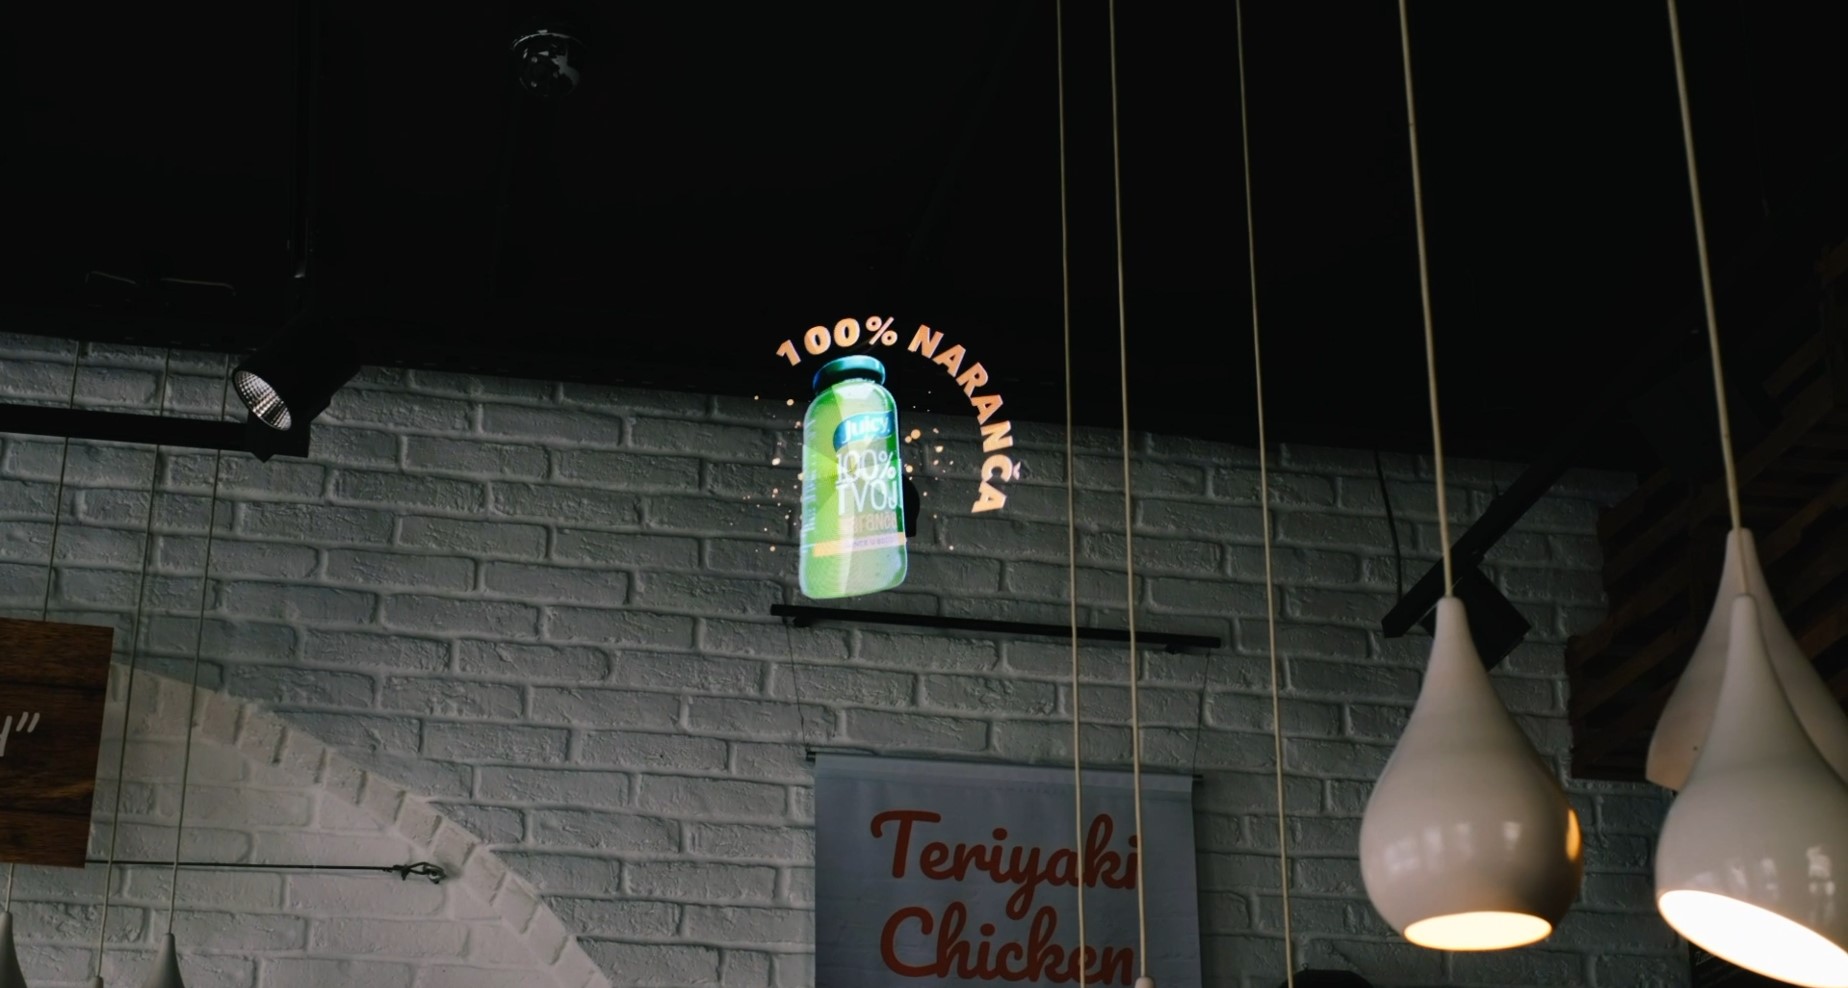 3D HOLO AD in mega popular Good Food restaurants